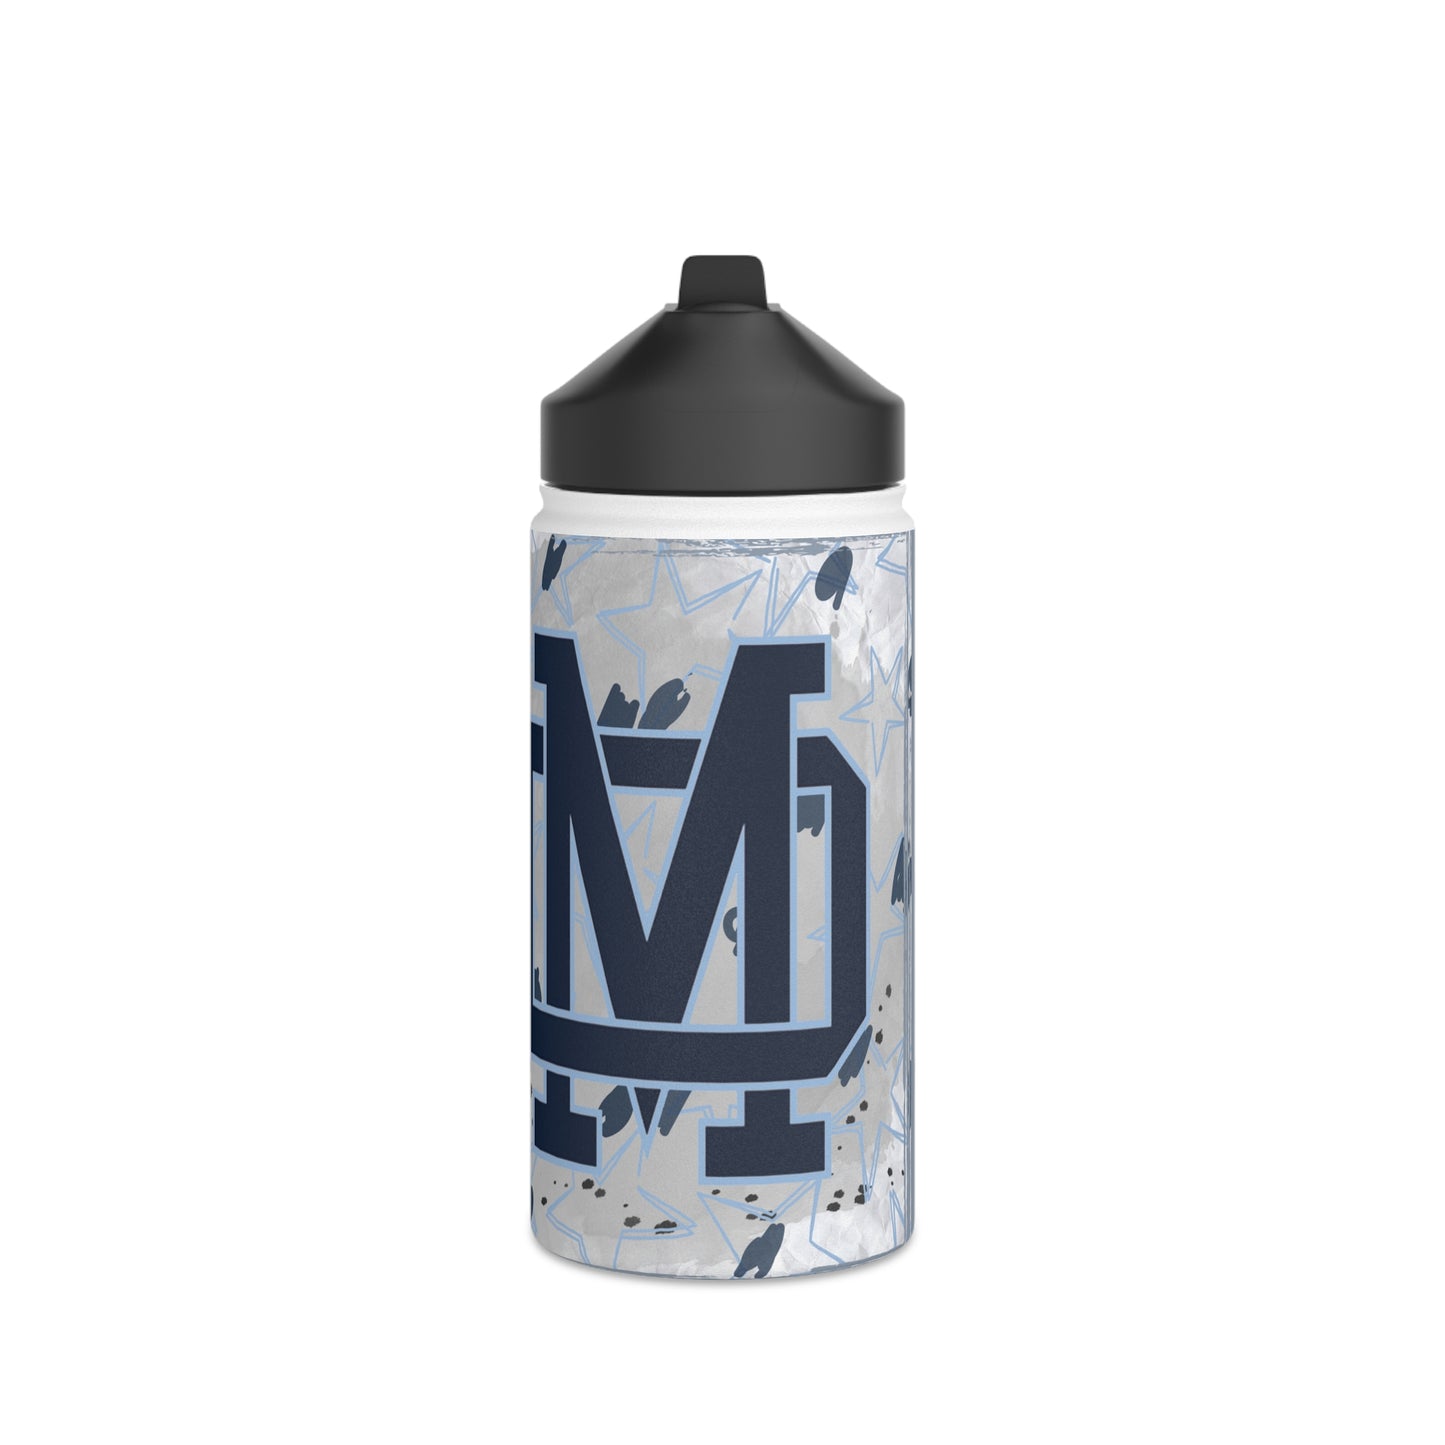 Mater Dei Stainless Steel Water Bottle